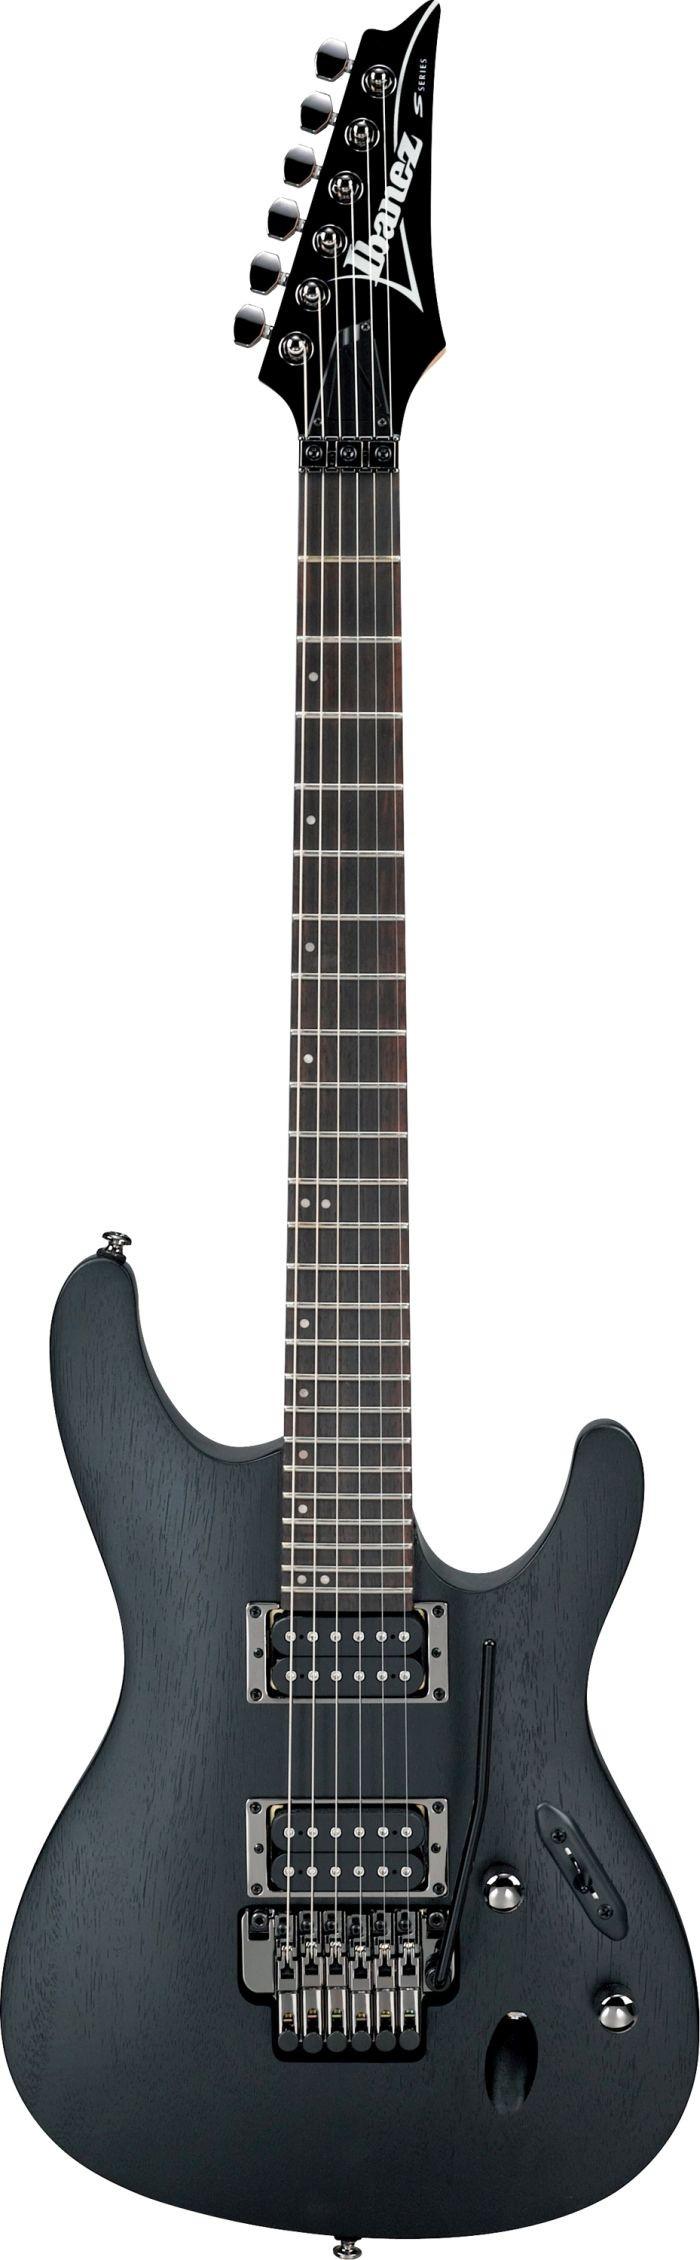 Ibañez - Guitarra Eléctrica S, Color: Negro Veteado Mod.S520-WK_90